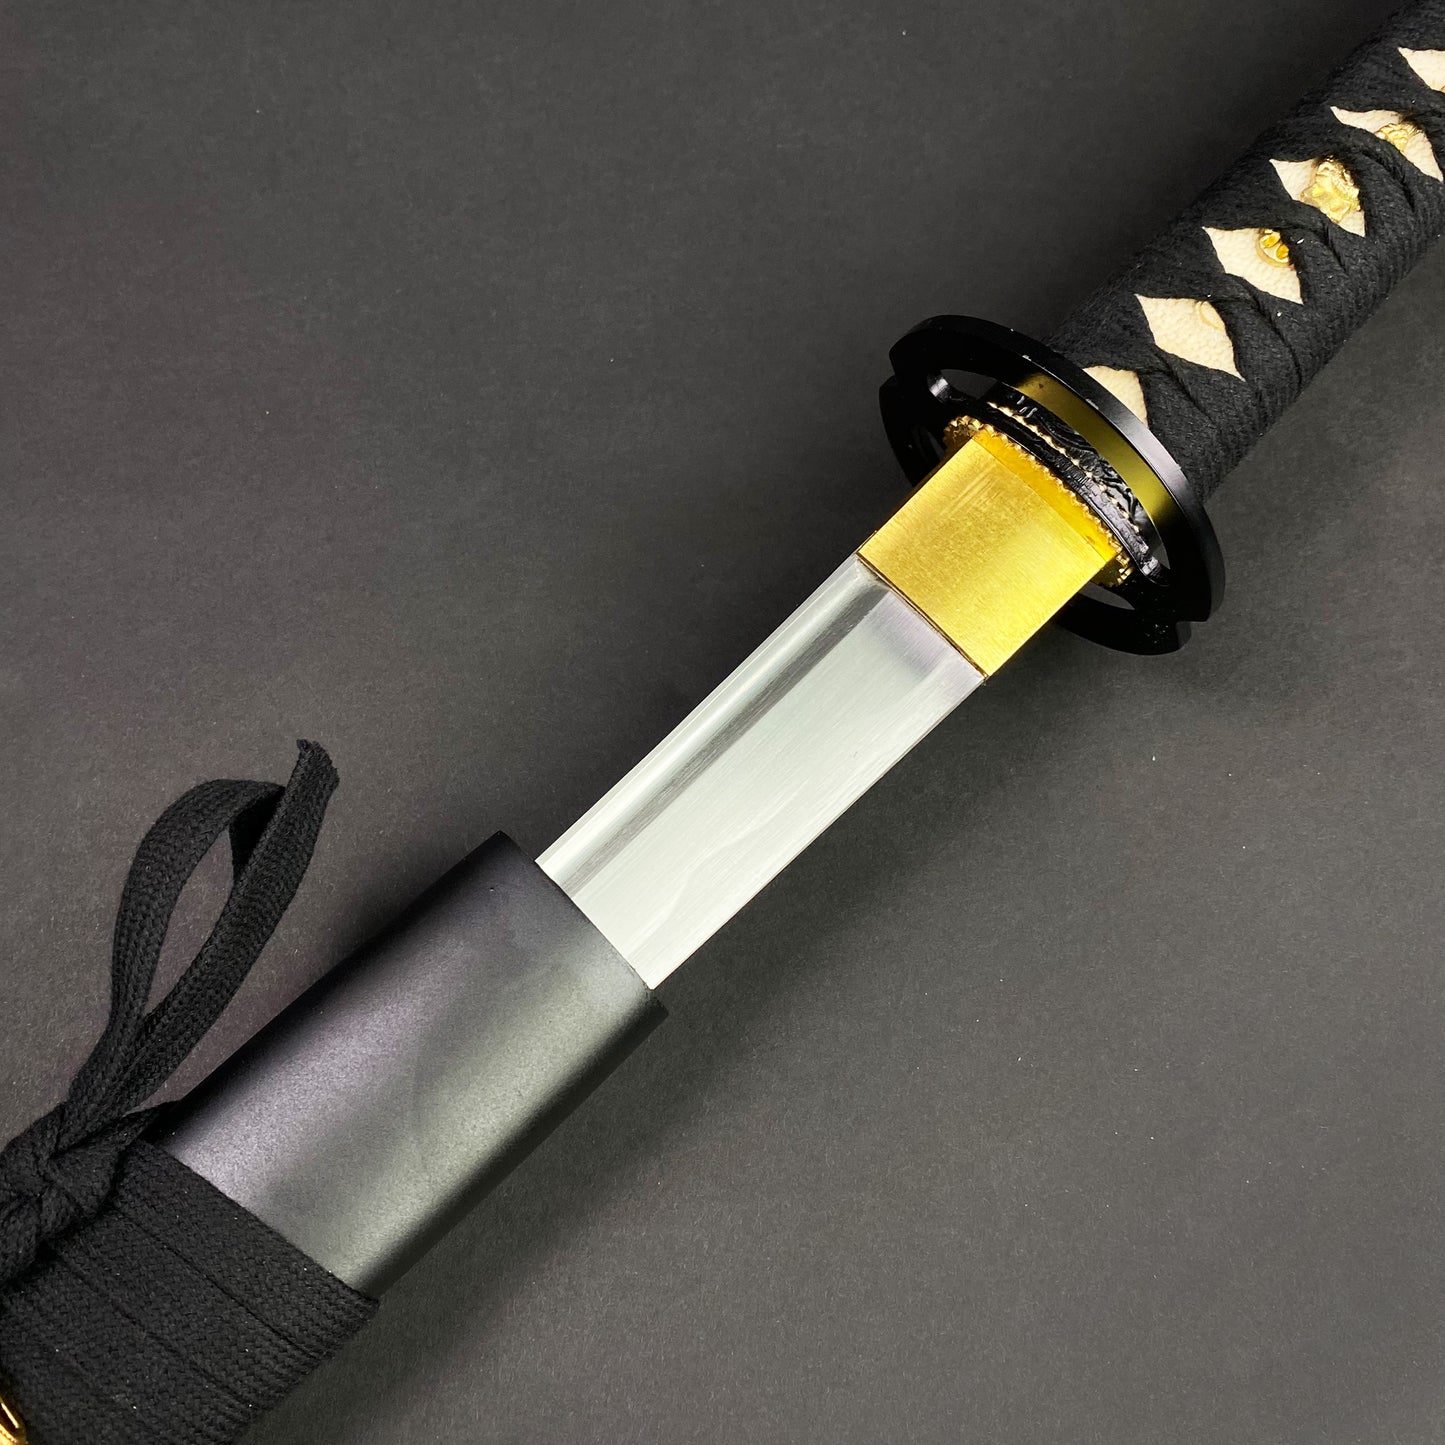 Musha Iaido Practice Katana - Authentic Samurai Practice Sword